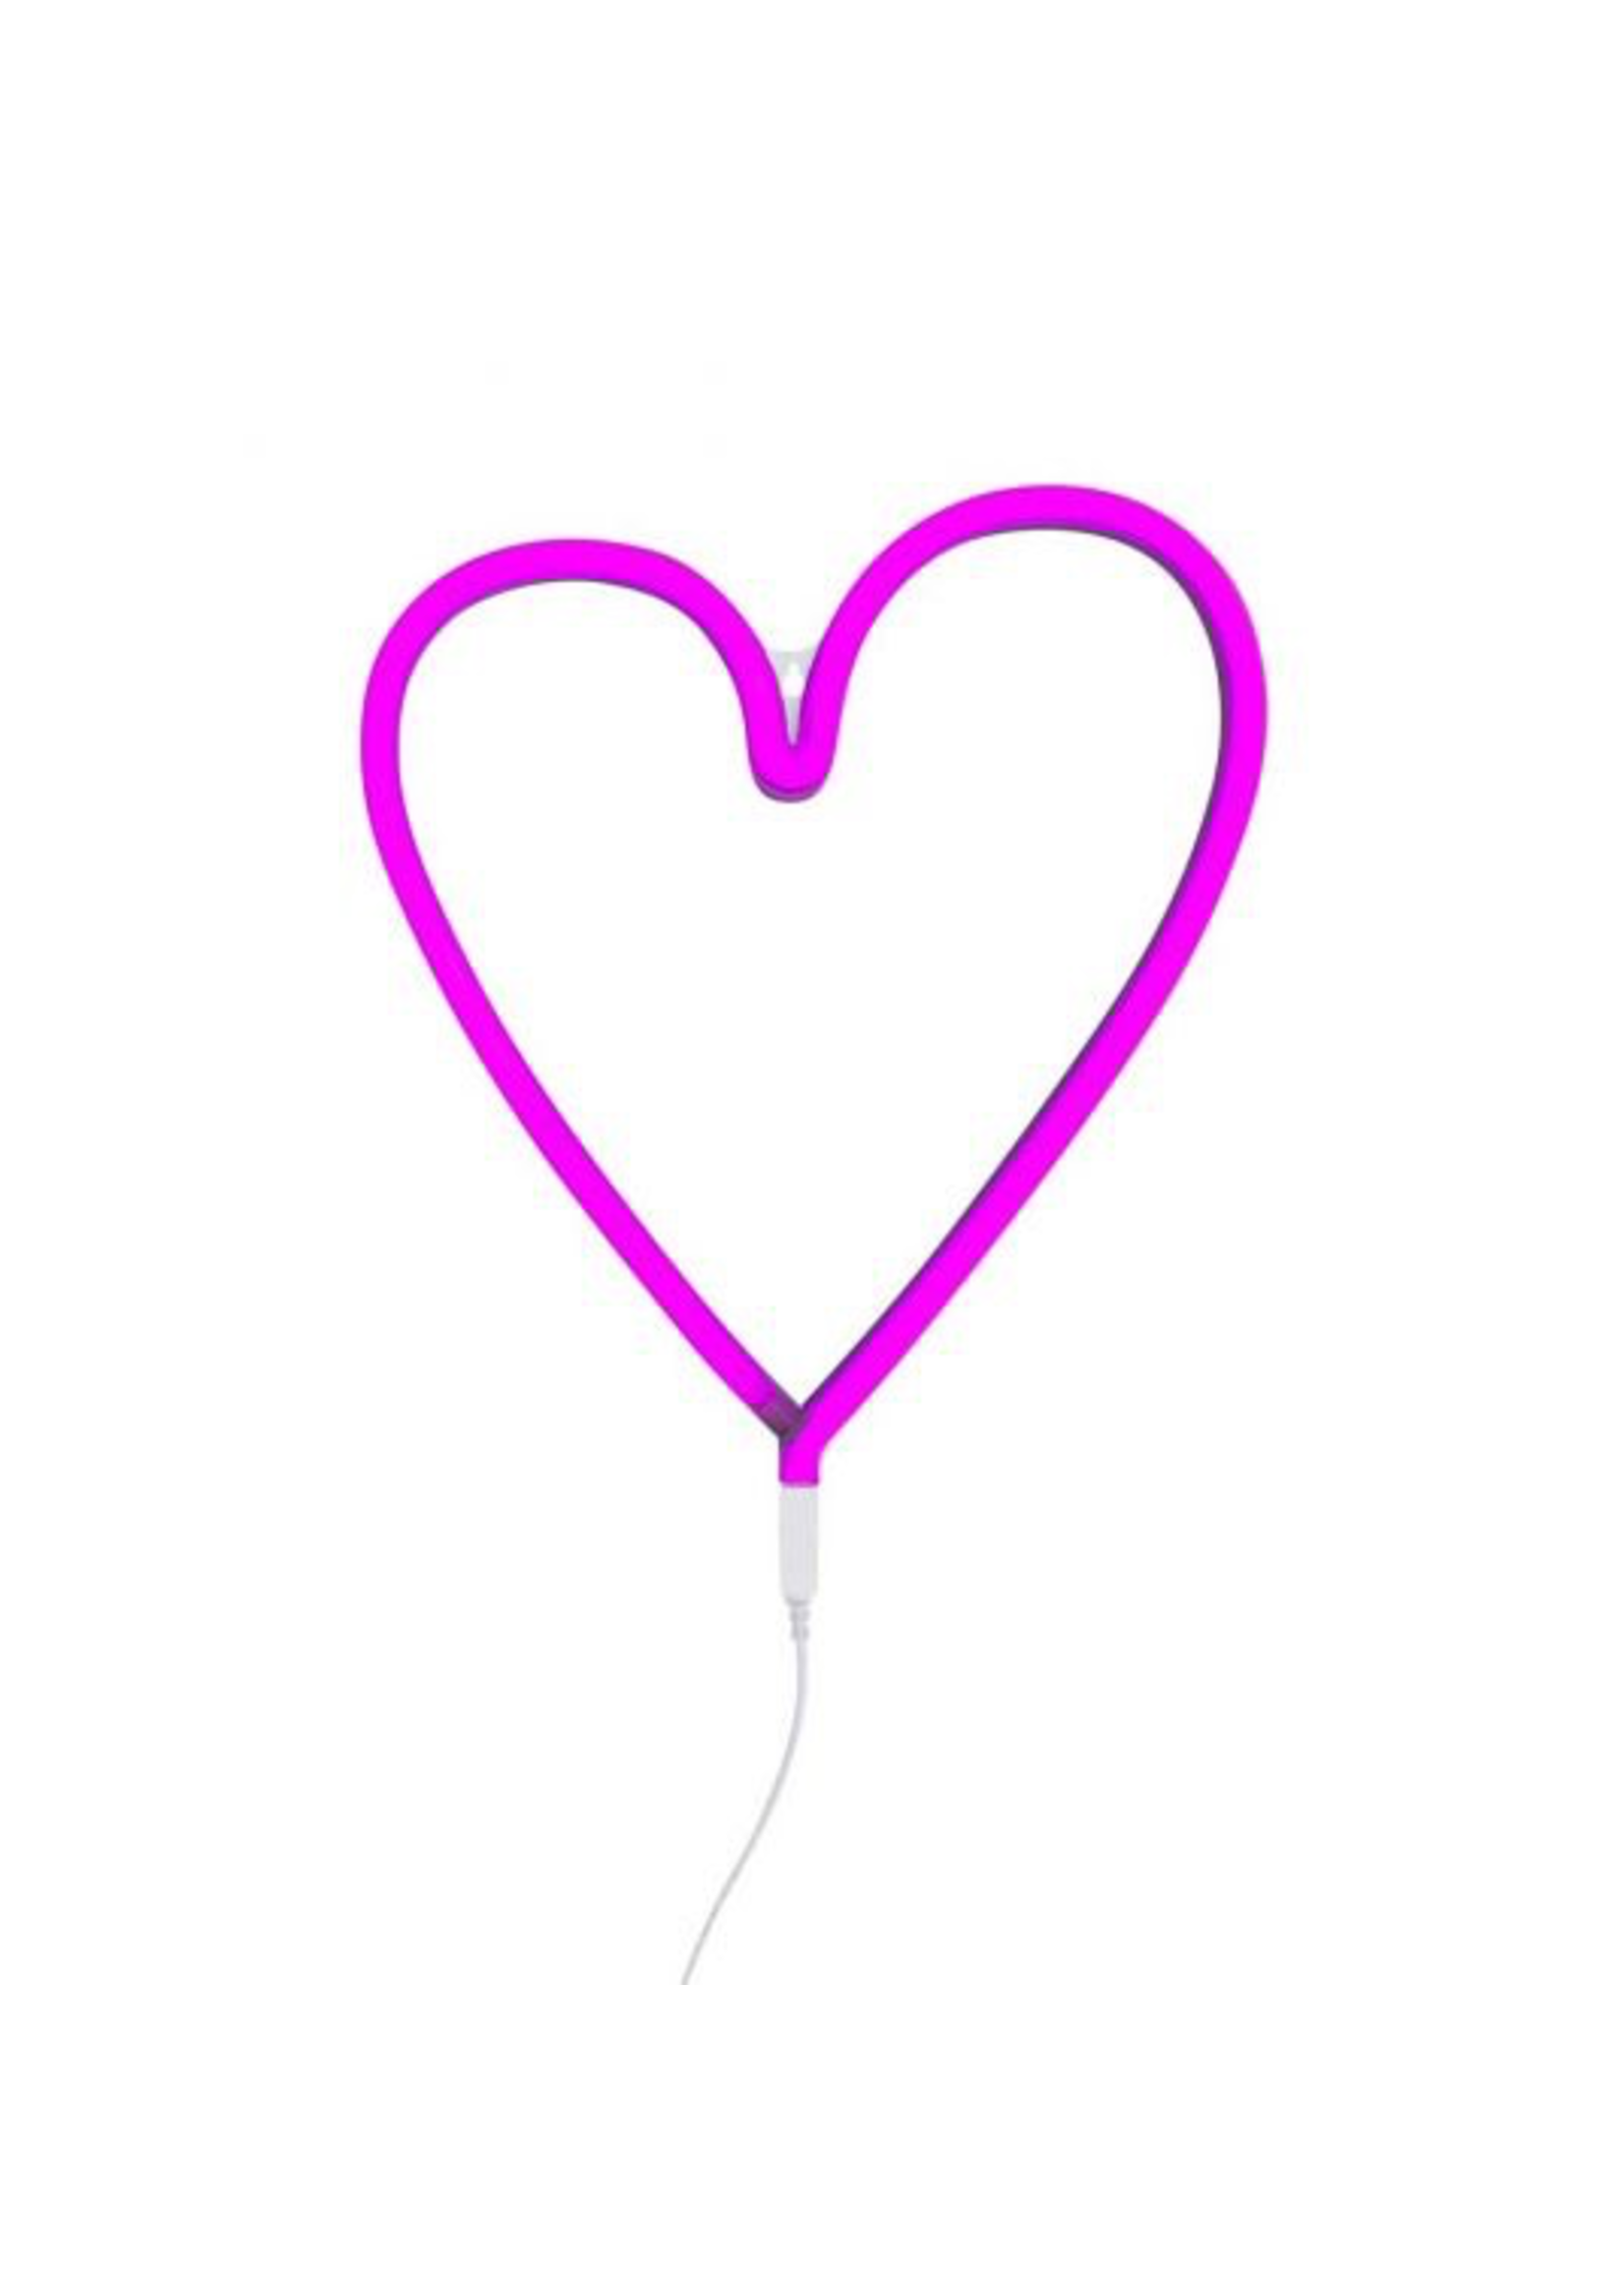 A Little Lovely Co. A Little Lovely, Pink Heart Neon Light.